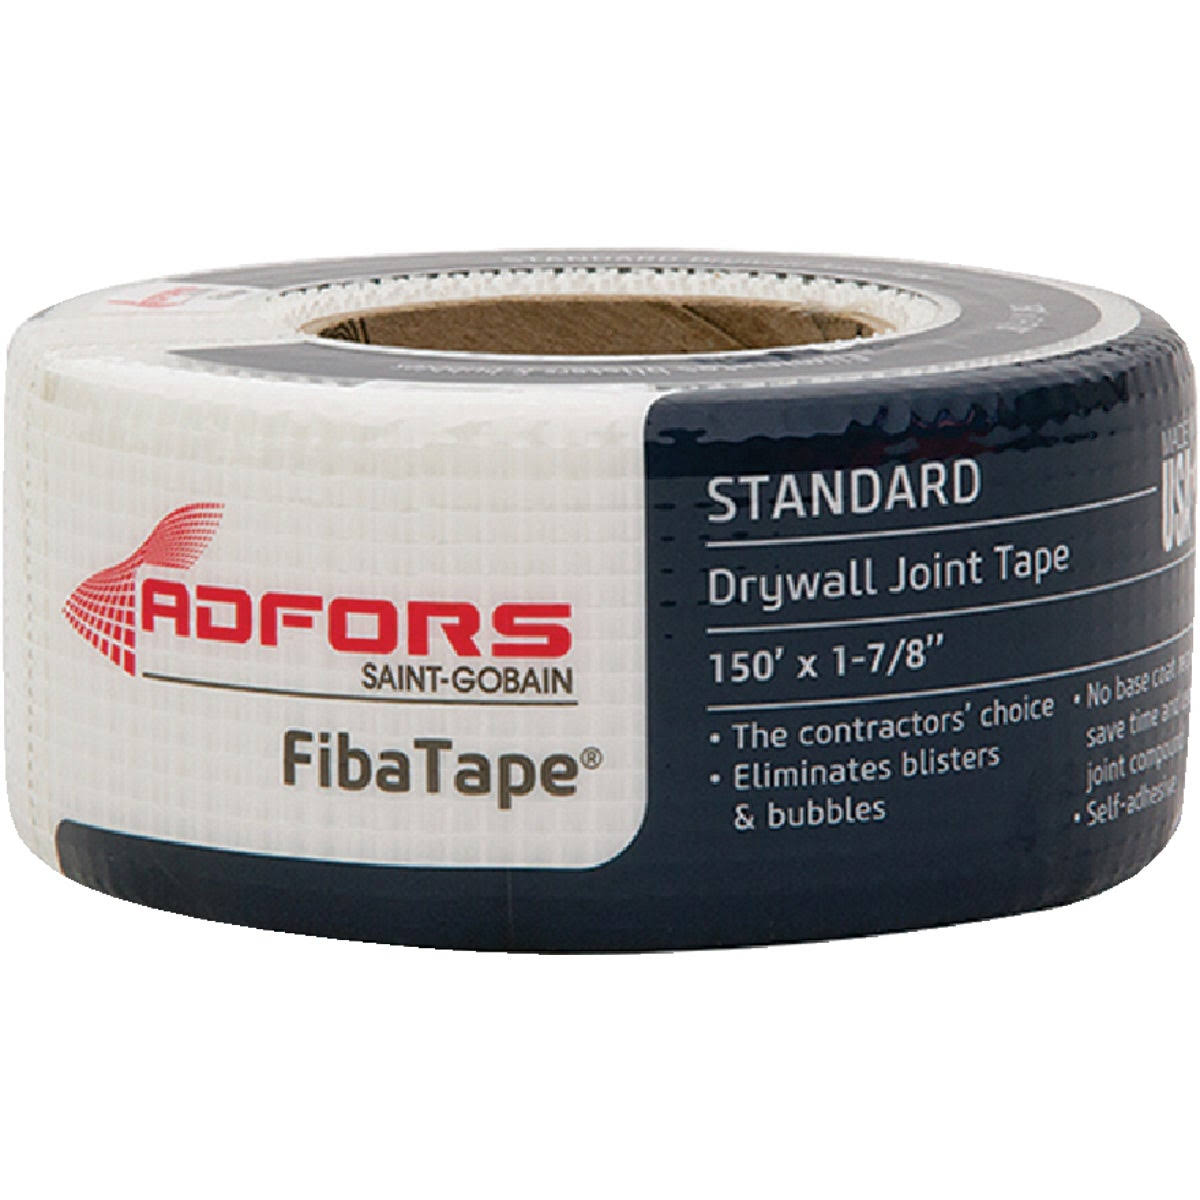 FibaTape Self-Adhesive Drywall Joint Tape - 150 ft, White